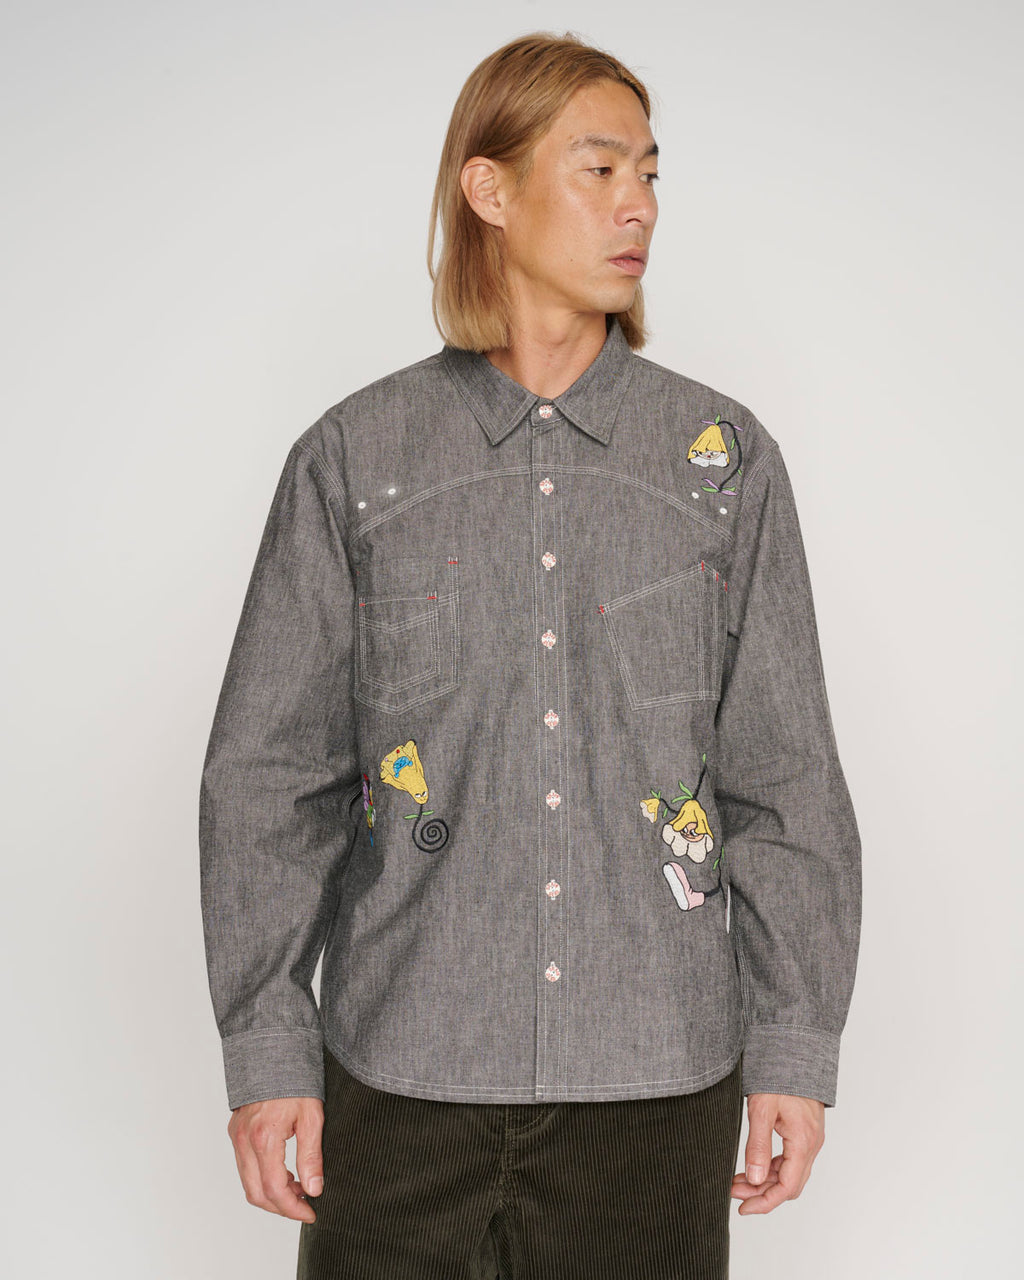 Garden Party Chambray Button Up Shirt - Gray 5